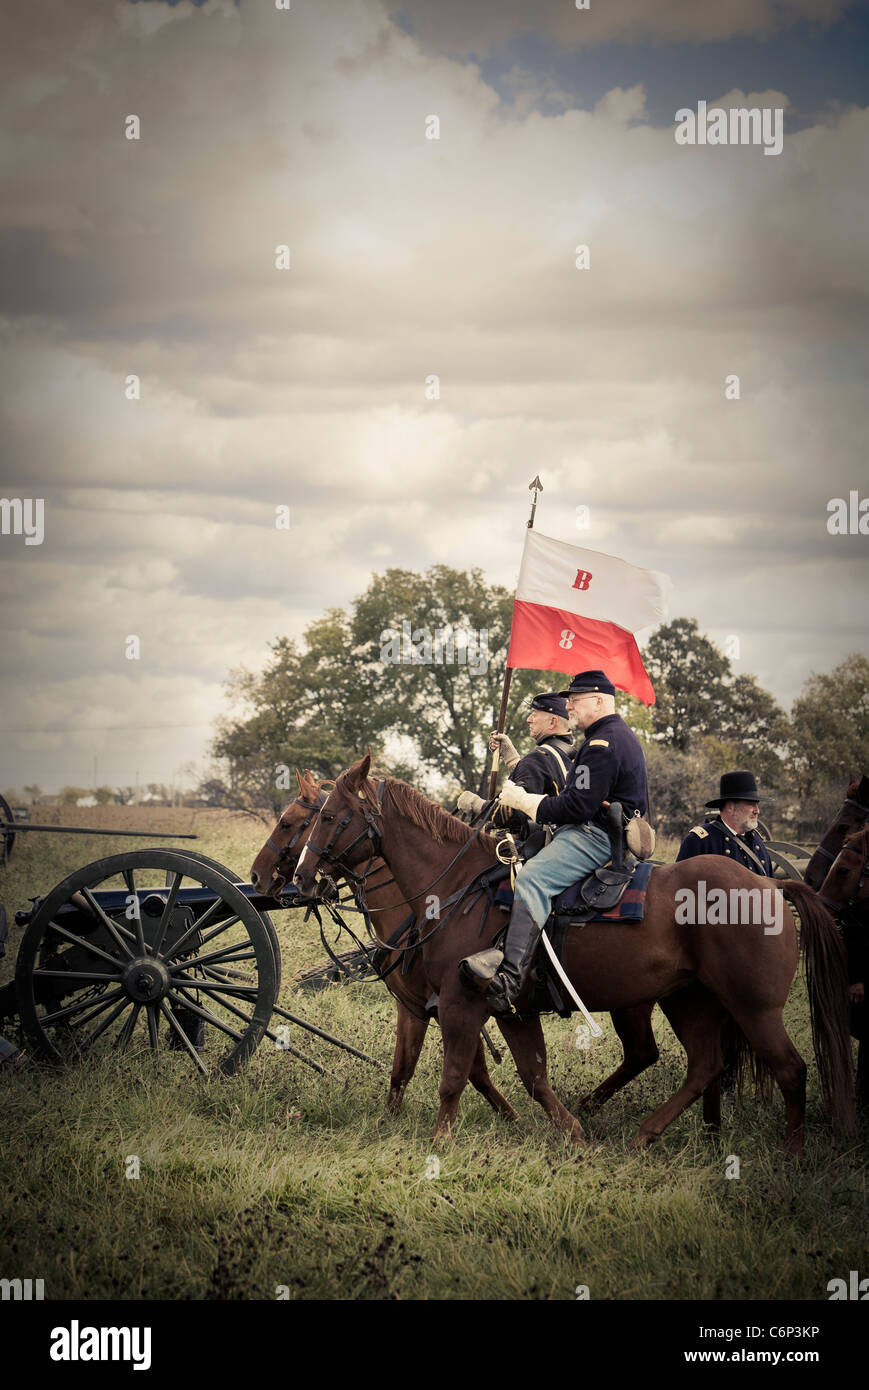 Civil war reenactors dressed as soldiers ride horses into battle Stock Photo